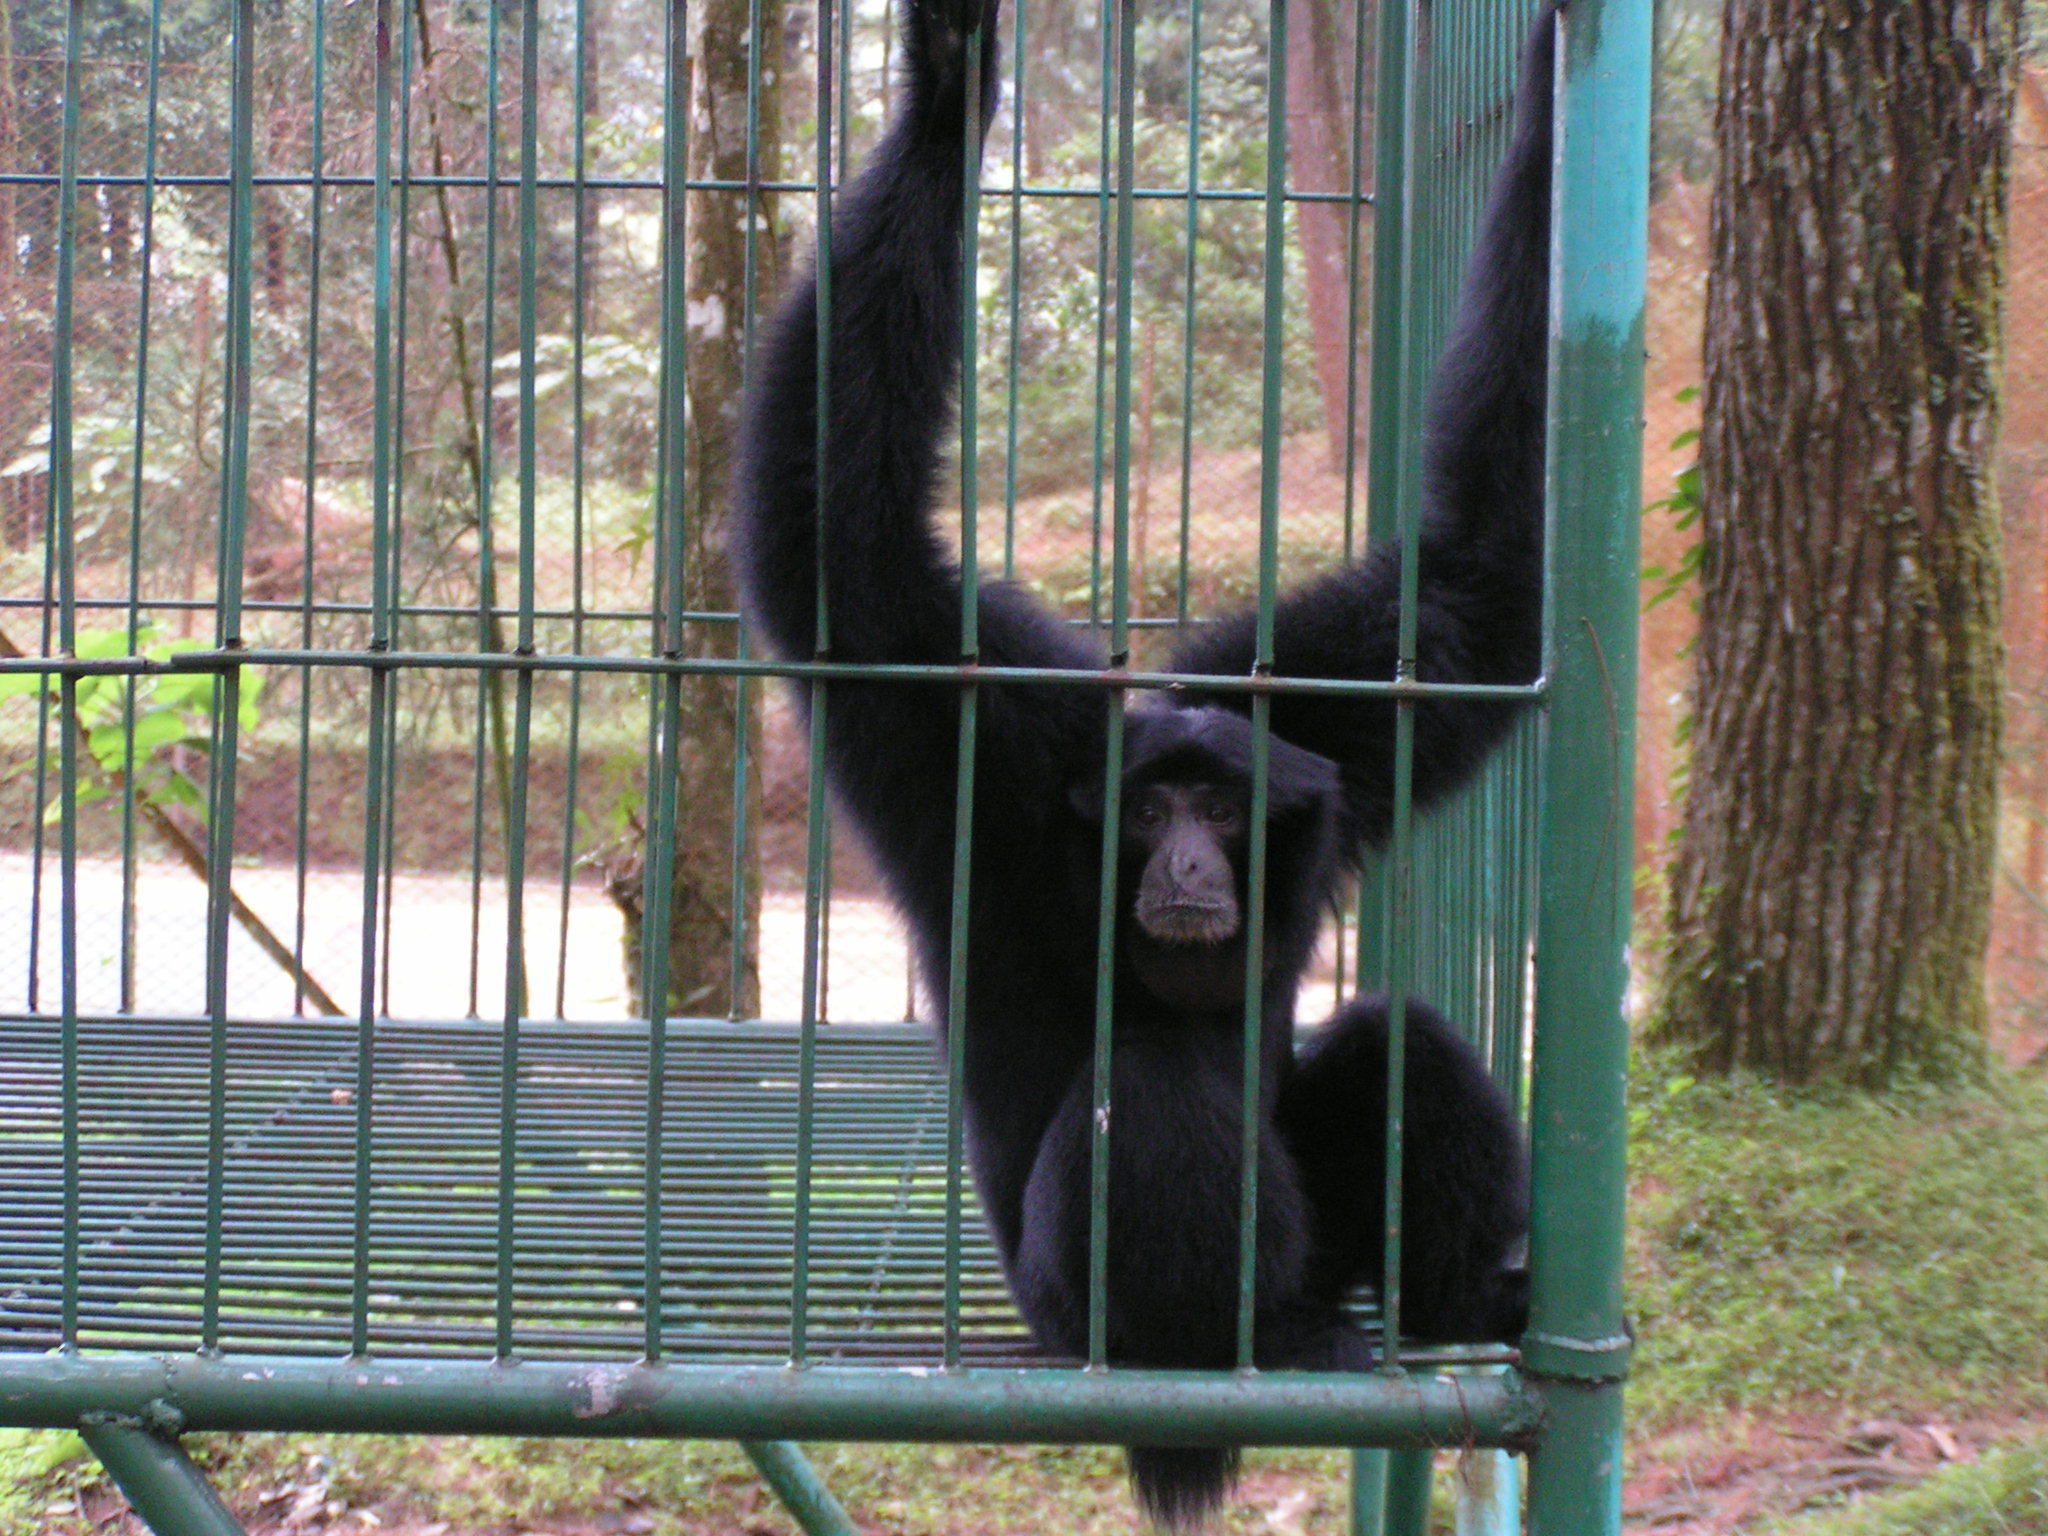 Black_monkey_in_green_cage,_2006.jpg